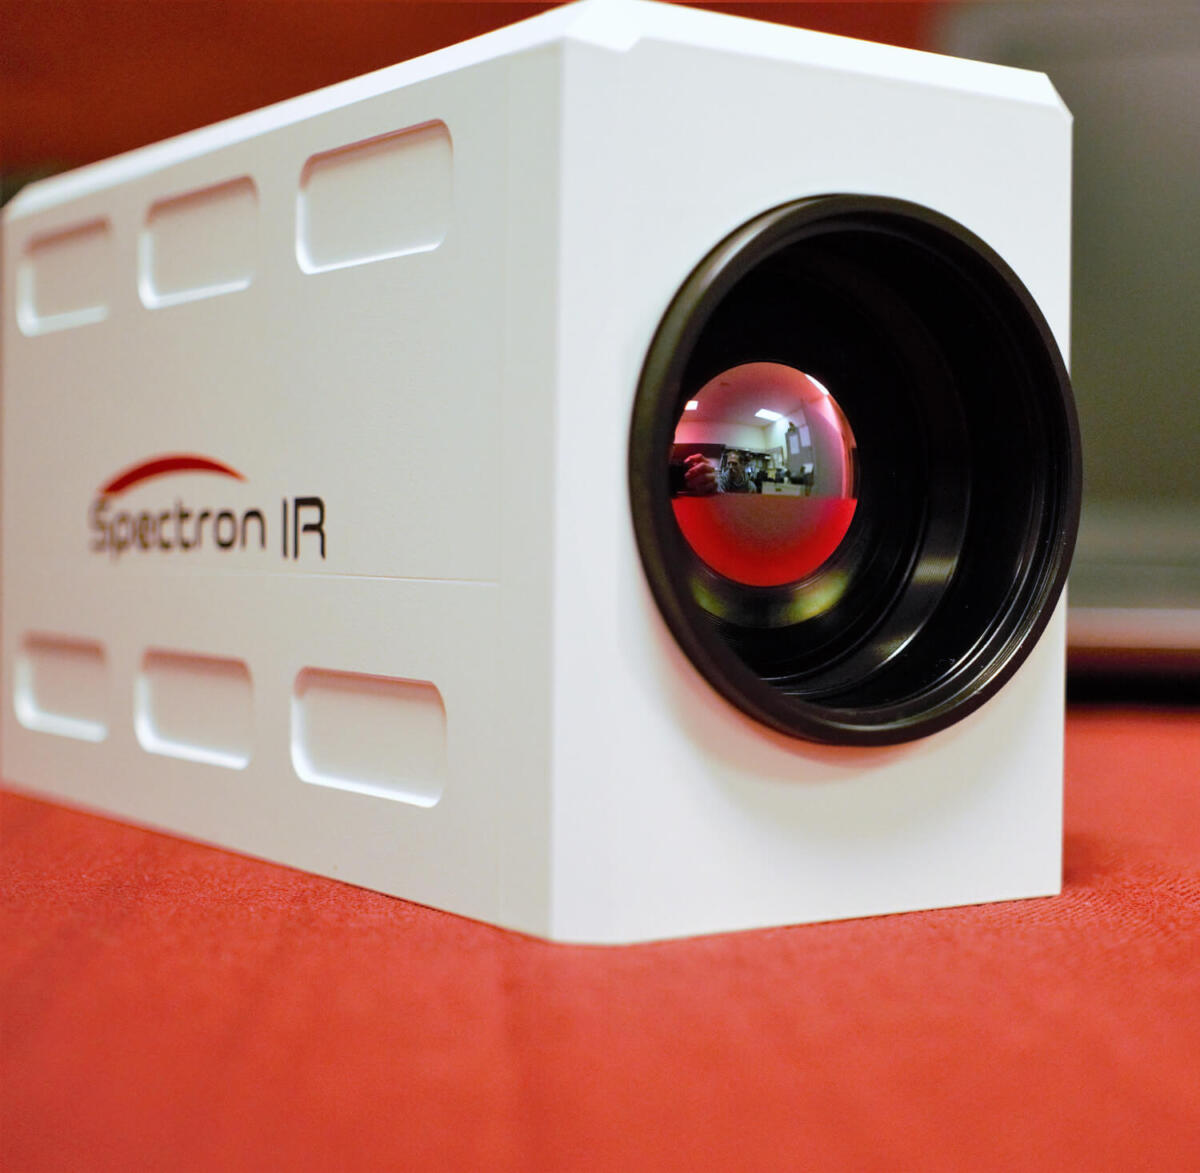 Spectron IR 640x480 Camera